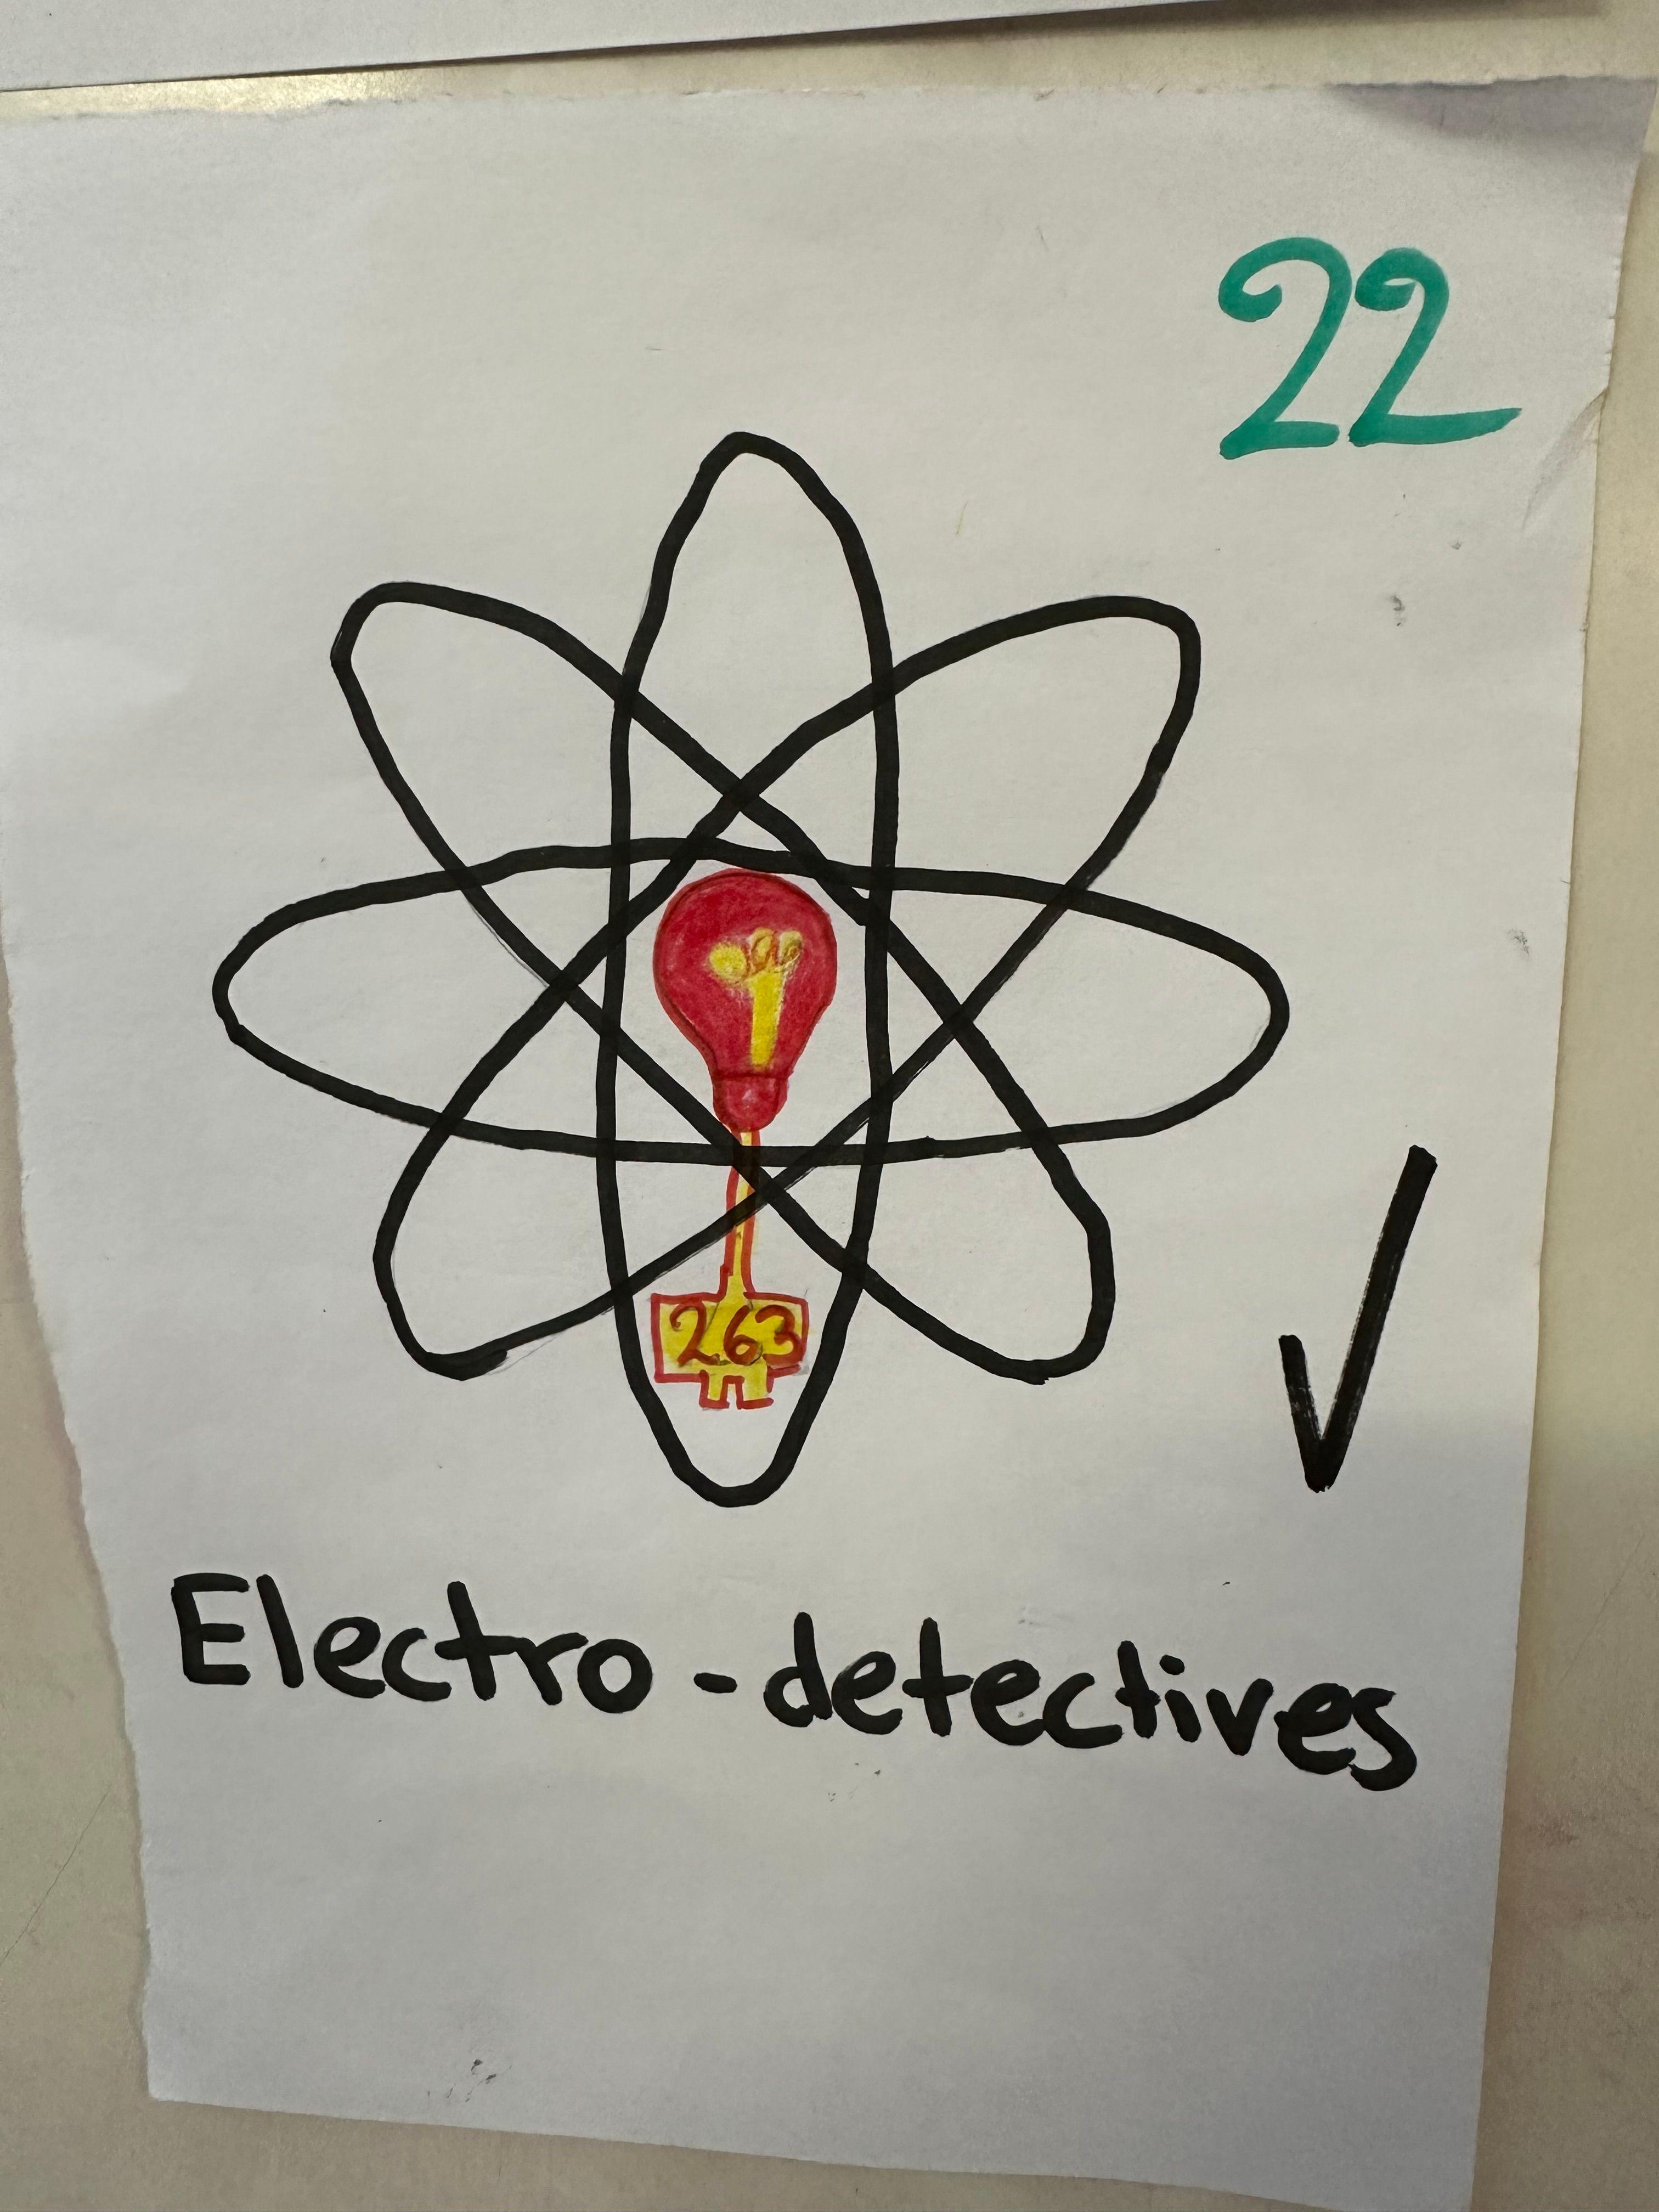 58. Electro detectives